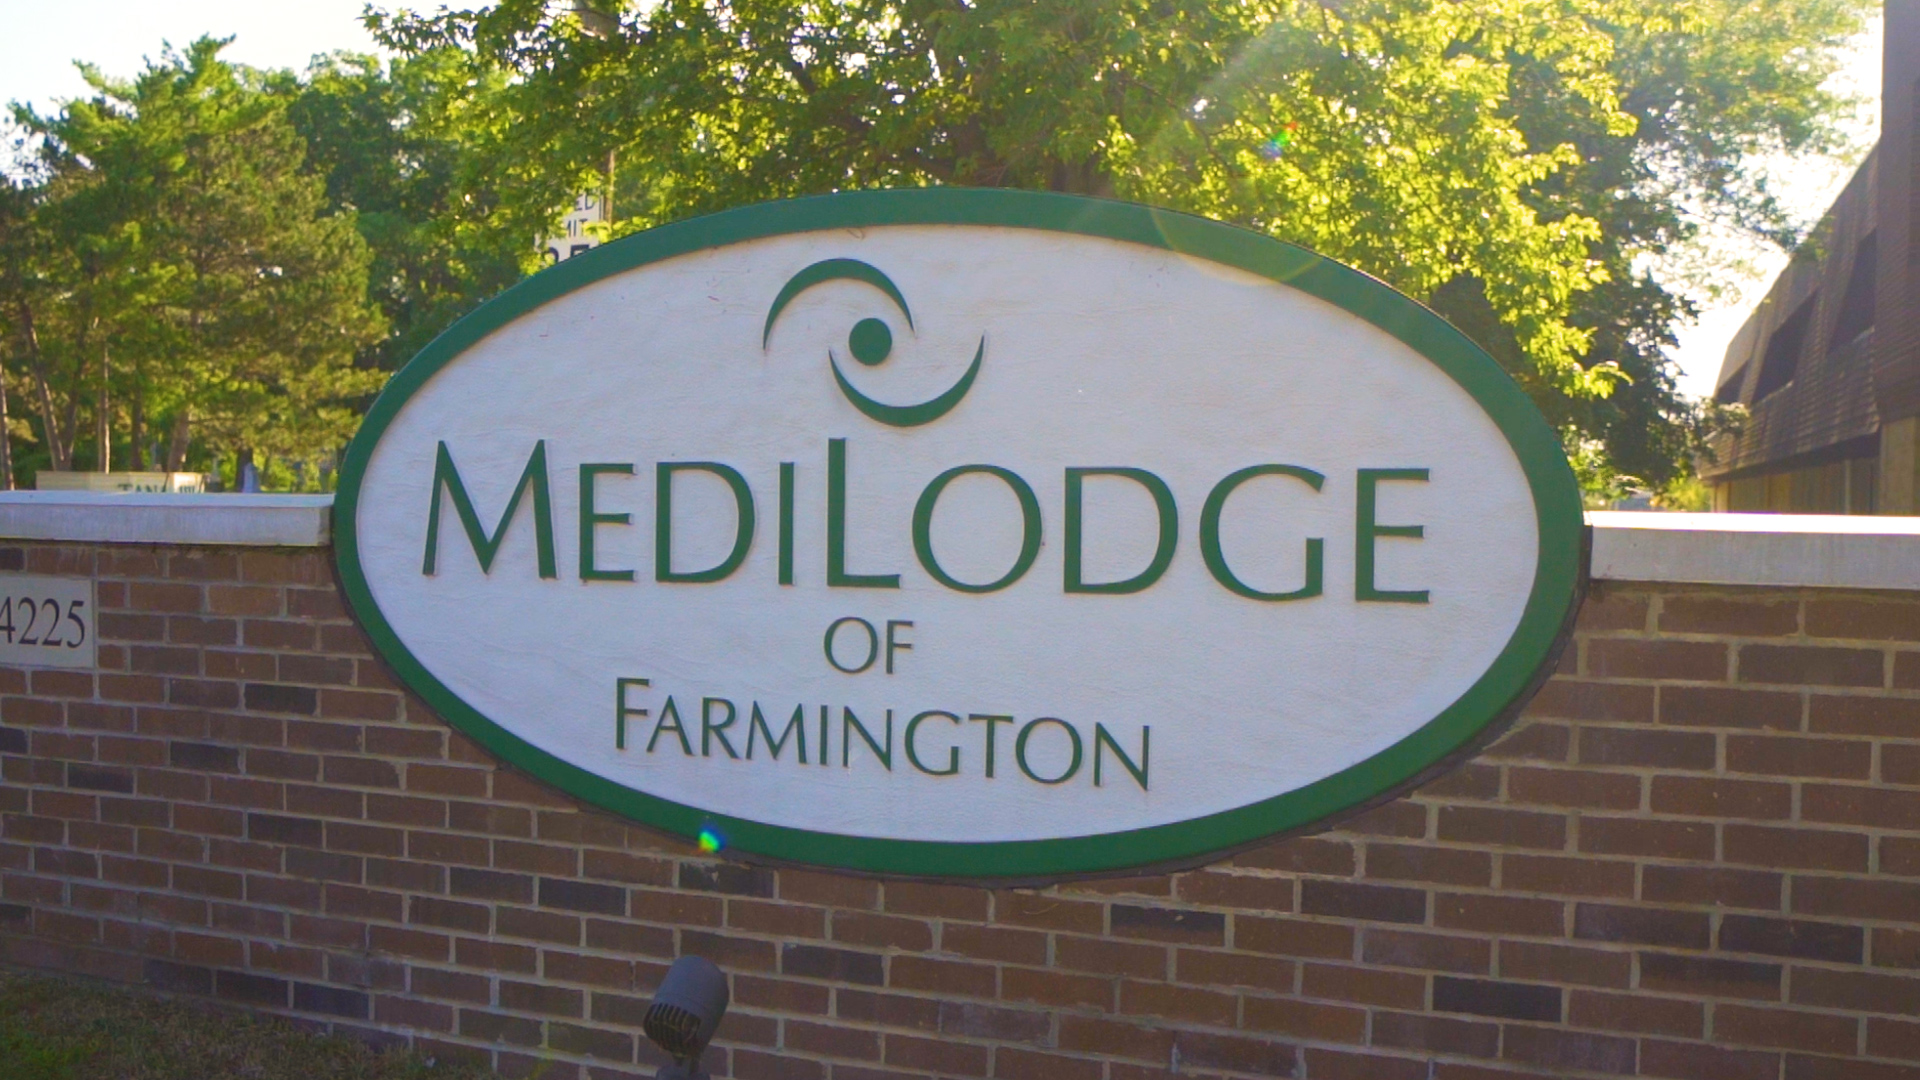 MediLodge of Farmington